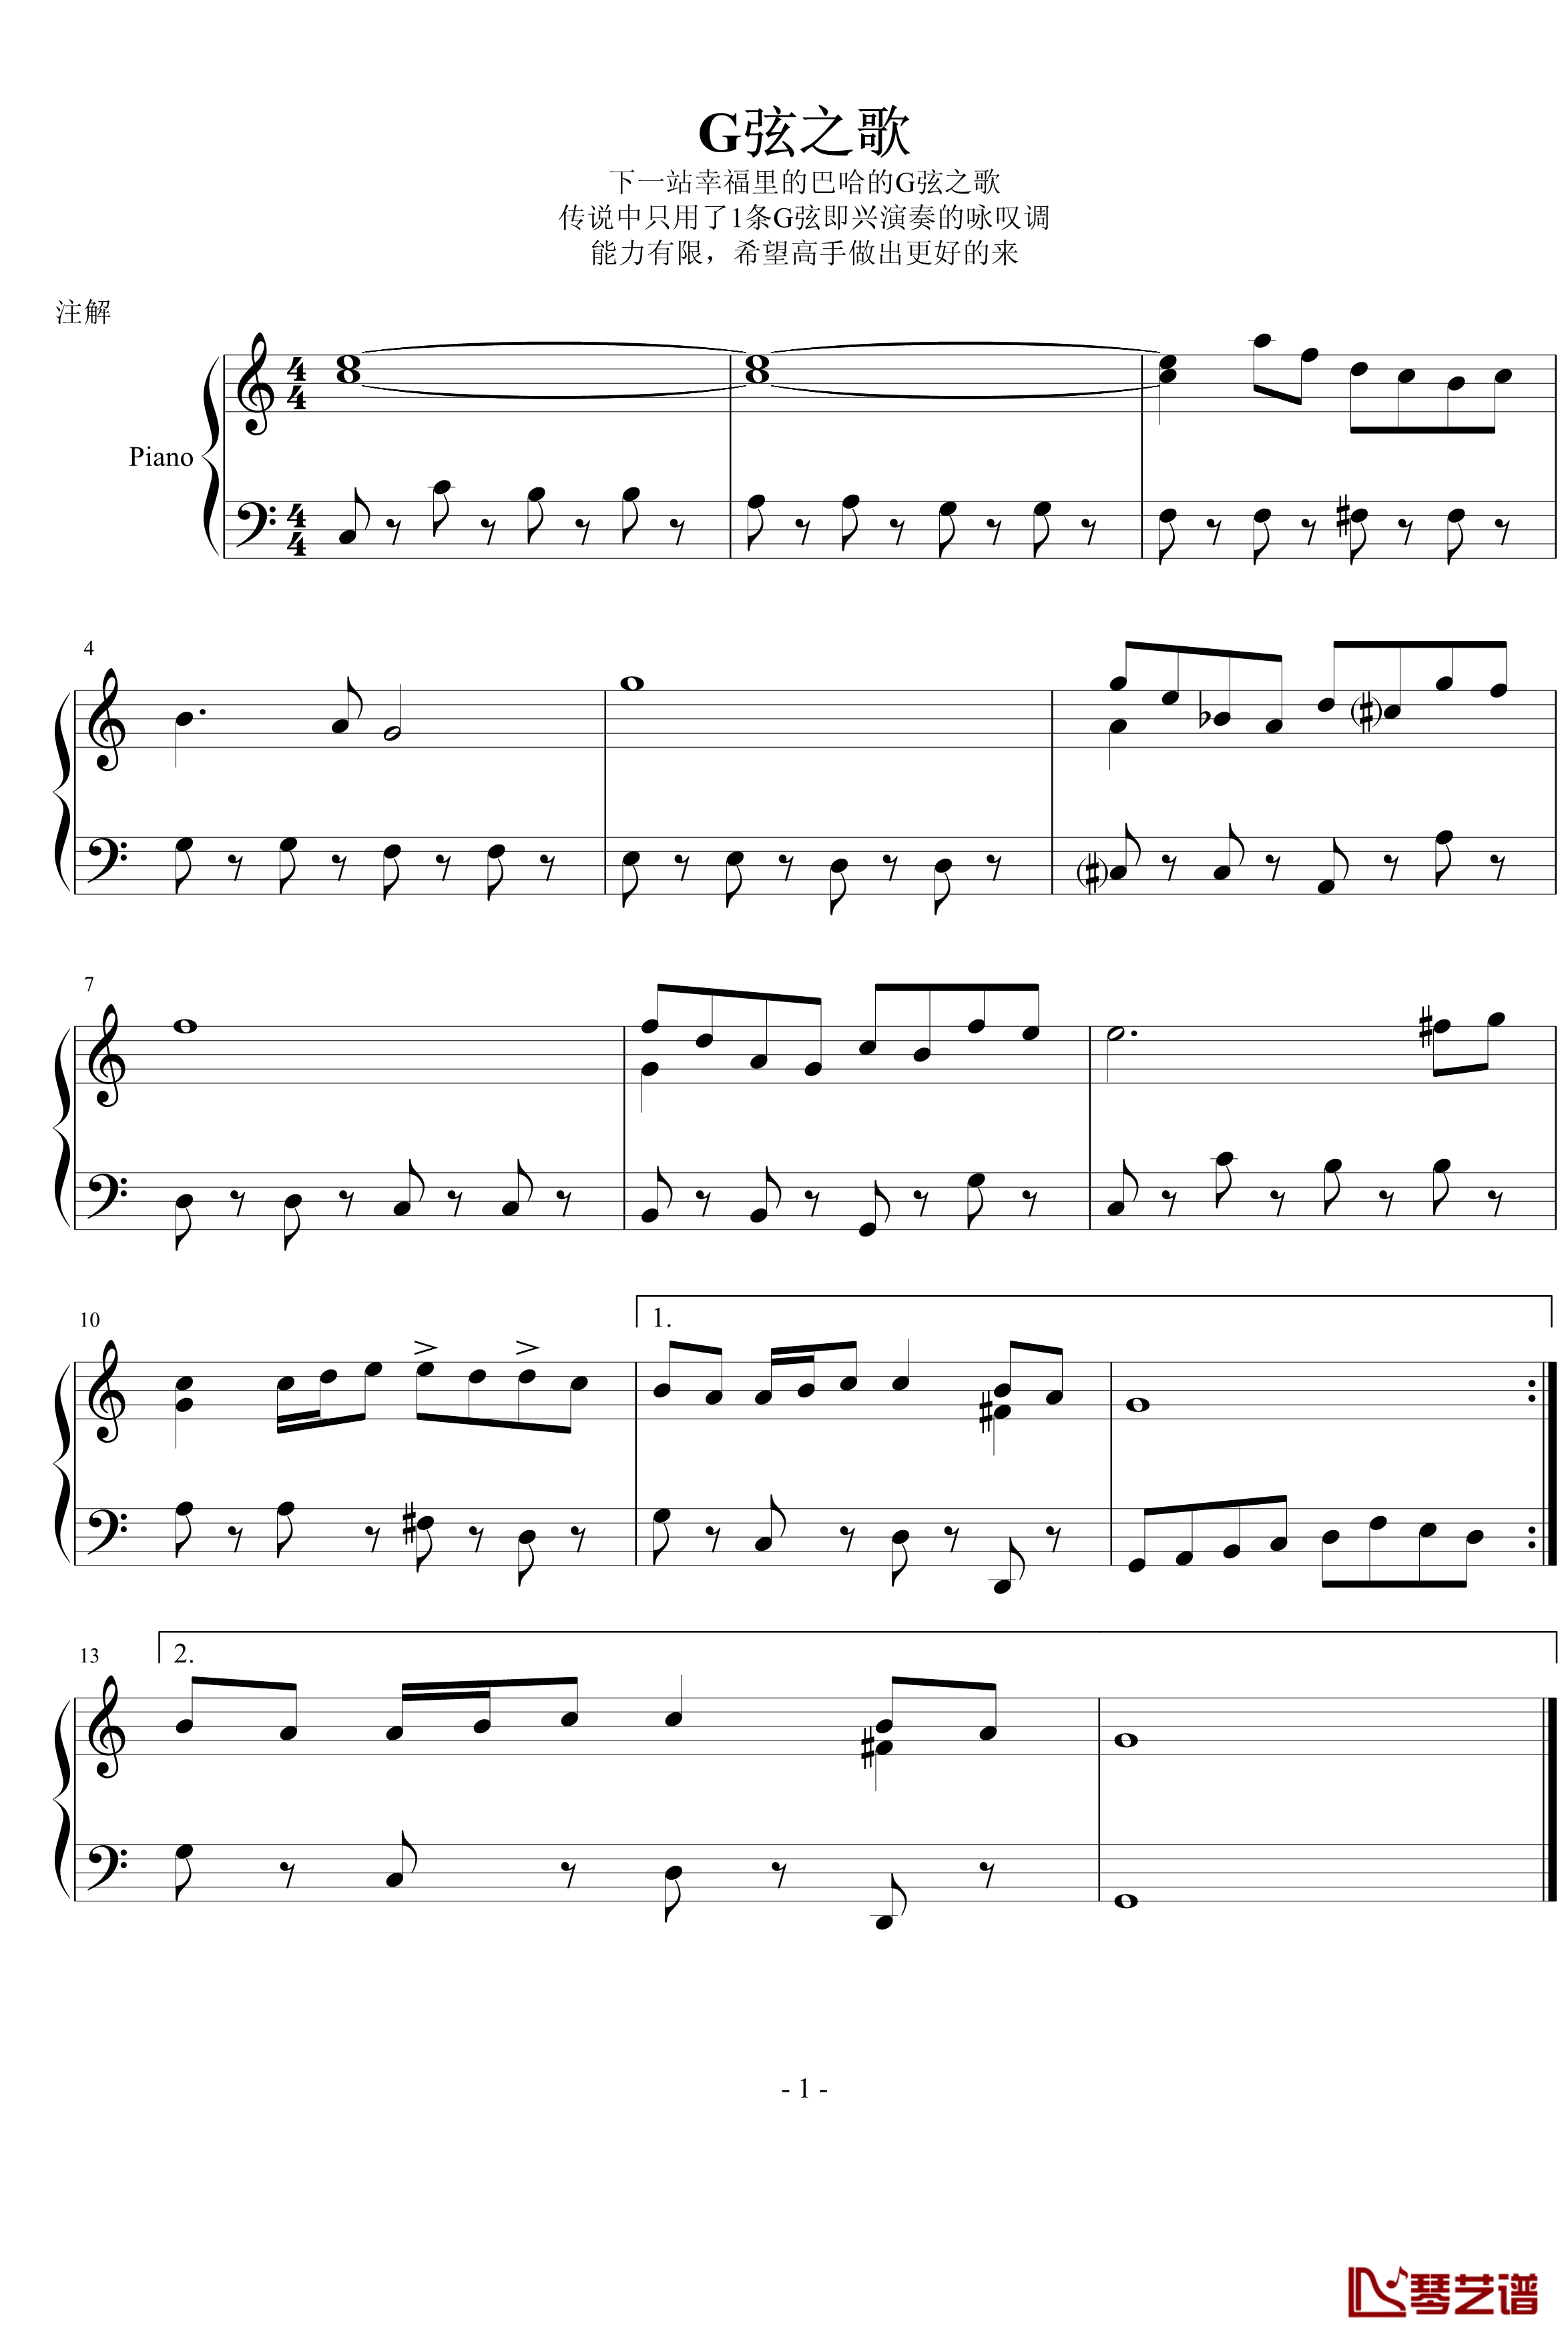 G弦之歌钢琴谱-简单版-巴赫-P.E.Bach